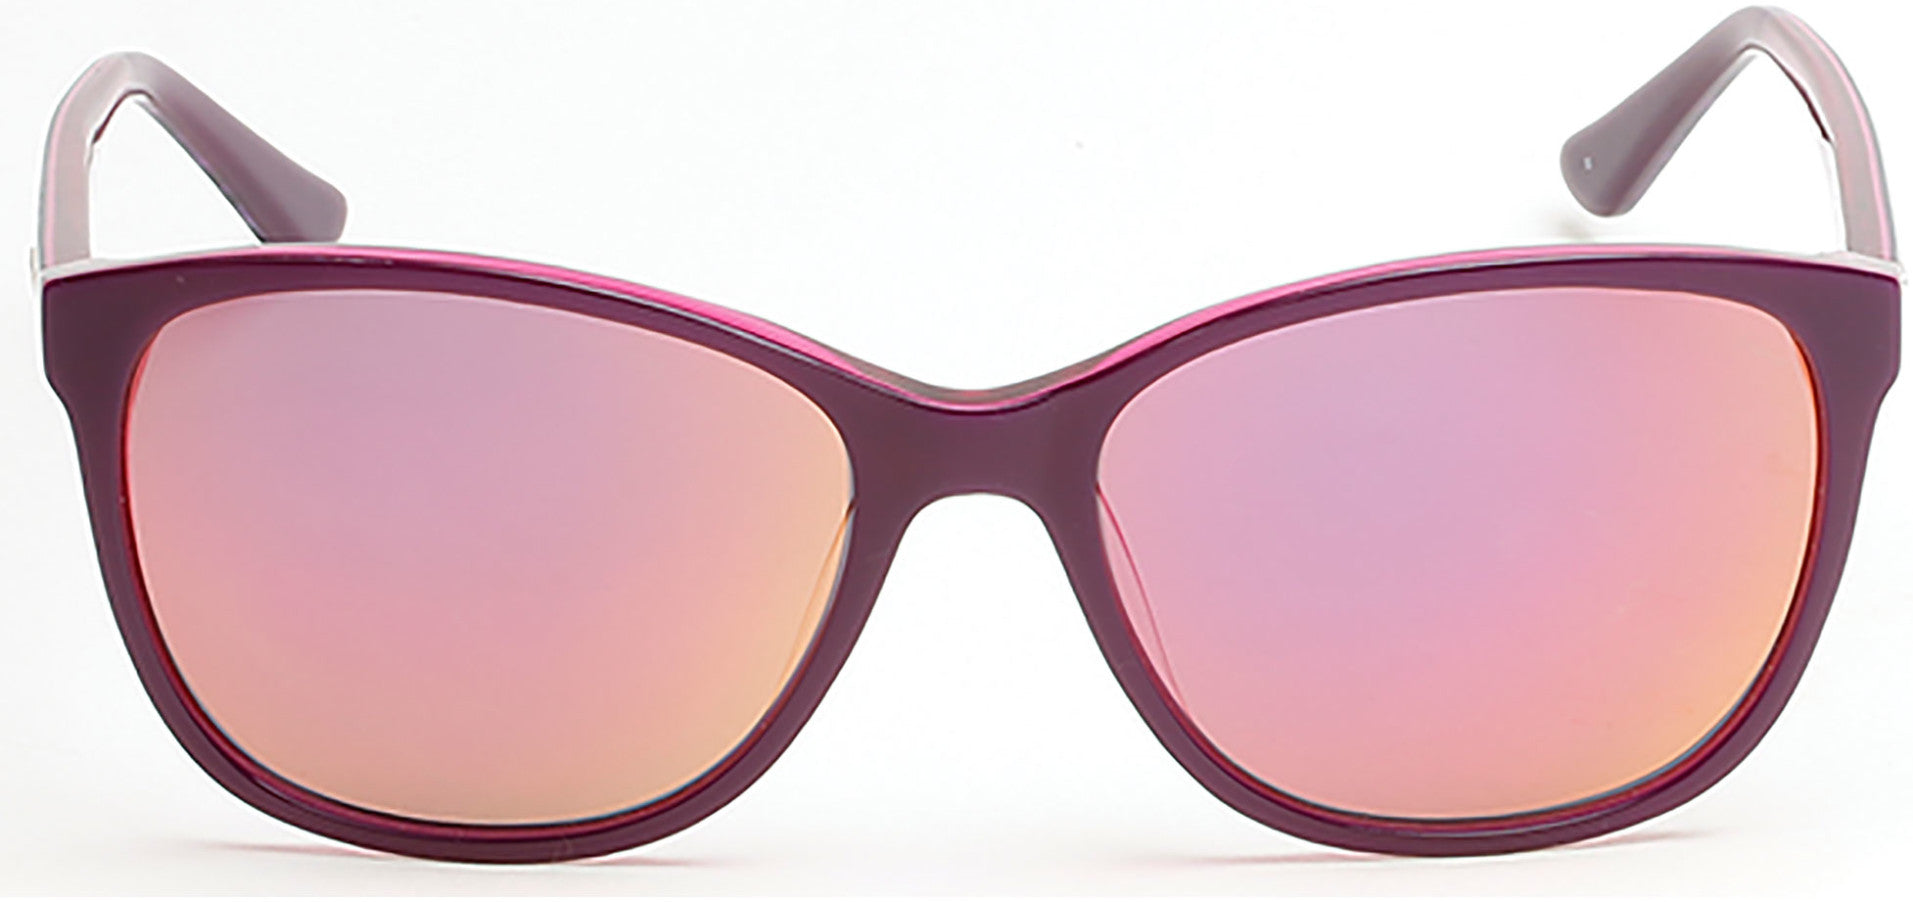 Guess GU7426 Geometric Sunglasses 81Z-81Z - Shiny Violet / Gradient Or Mirror Violet